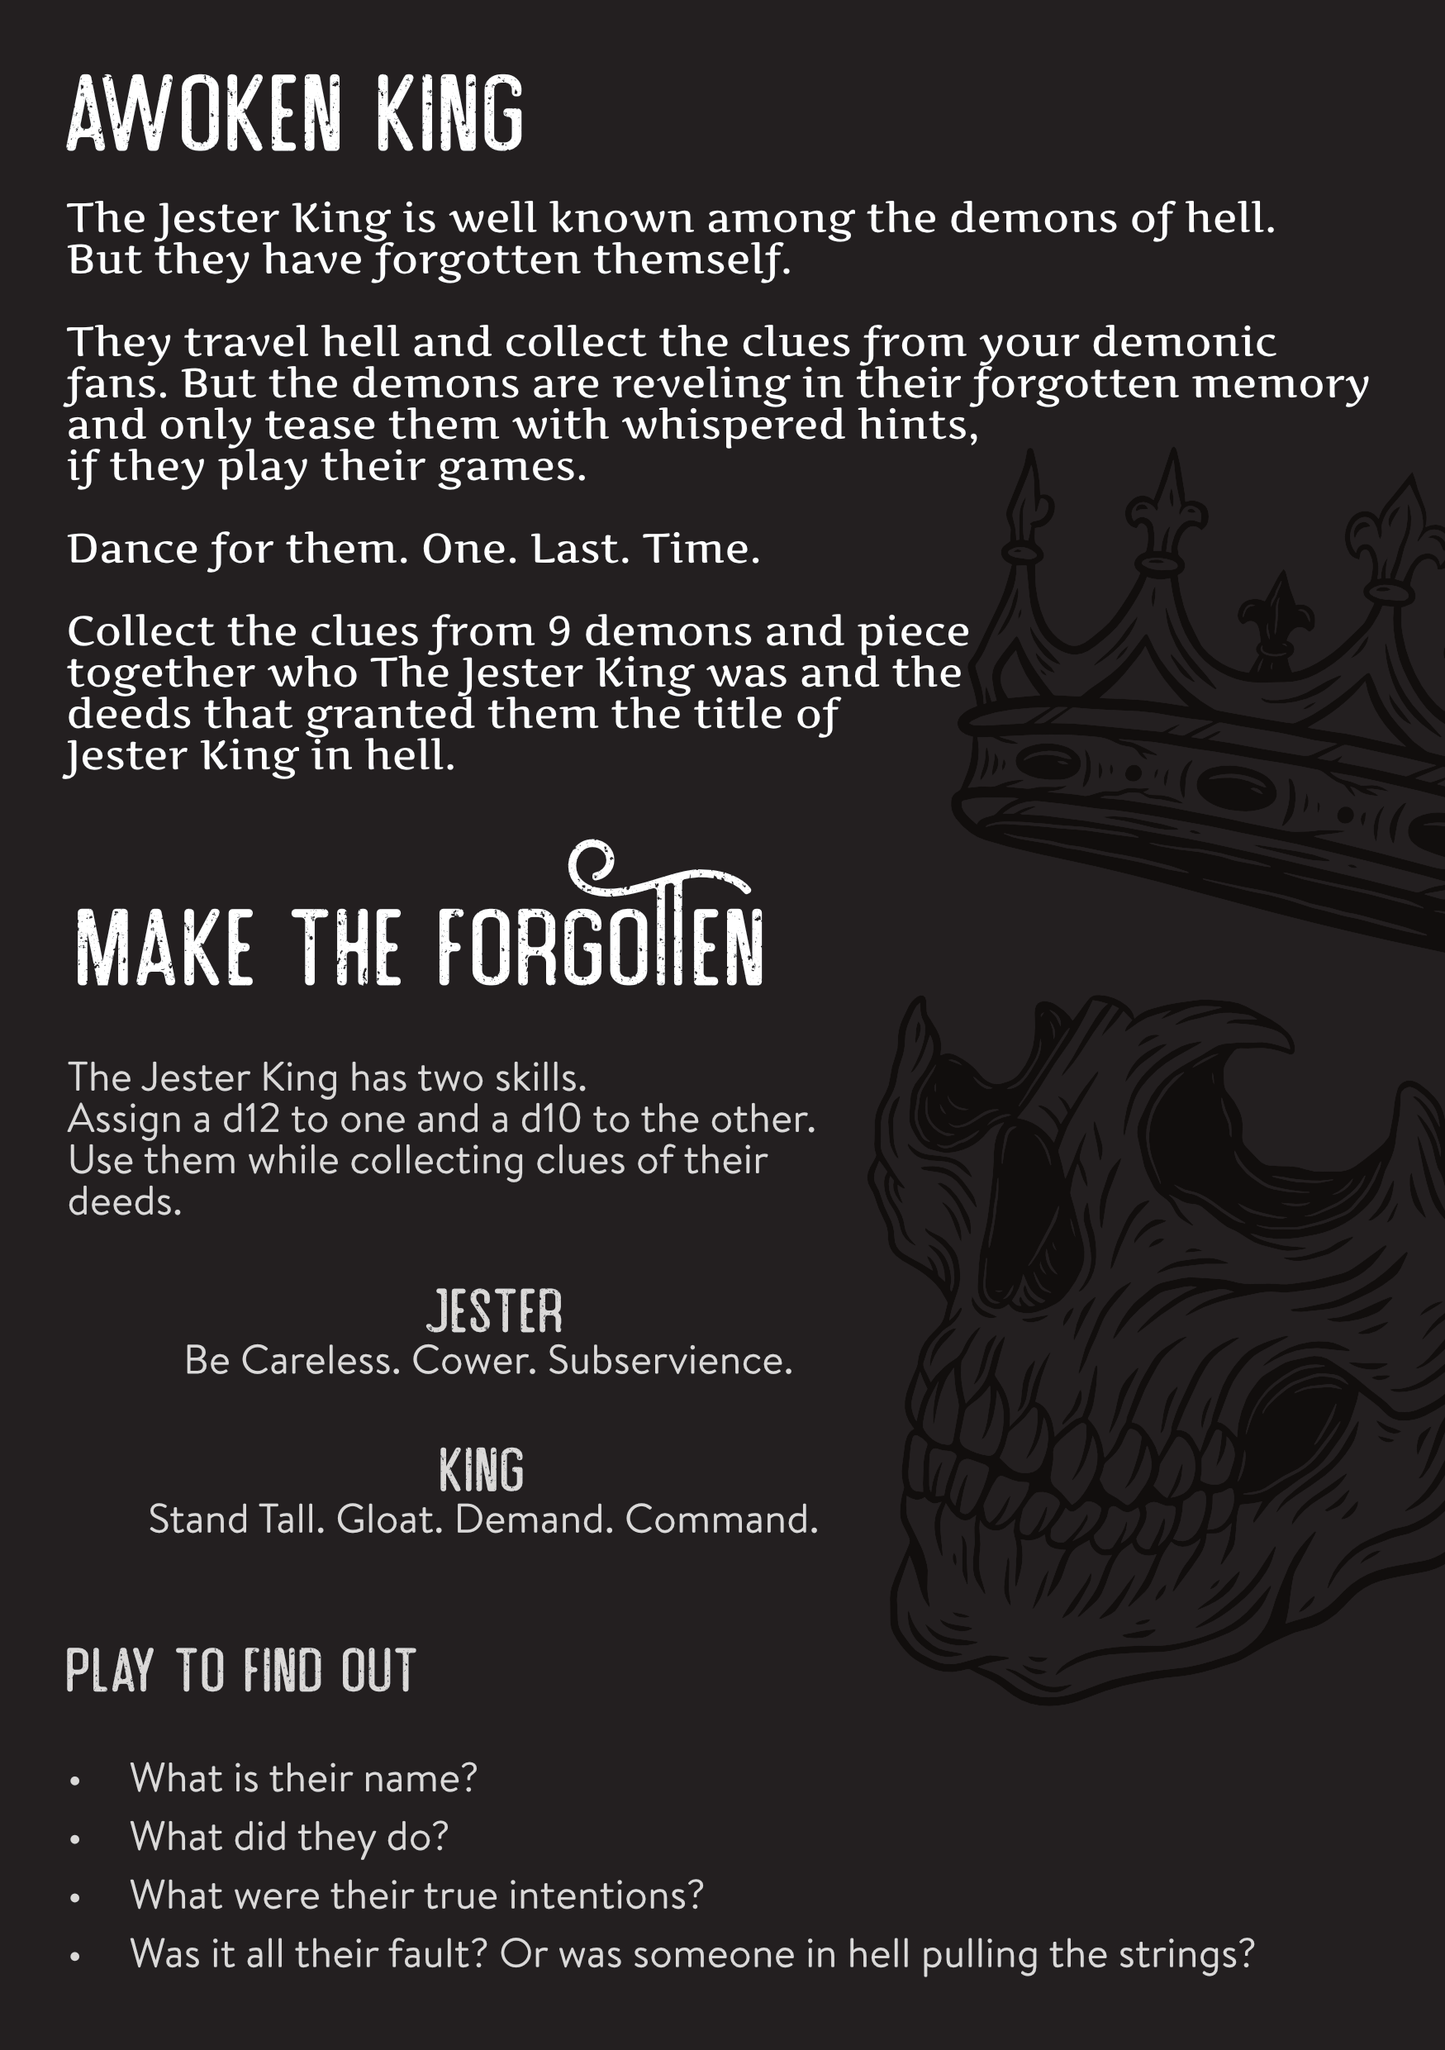 The Jester King's Dance (PDF)